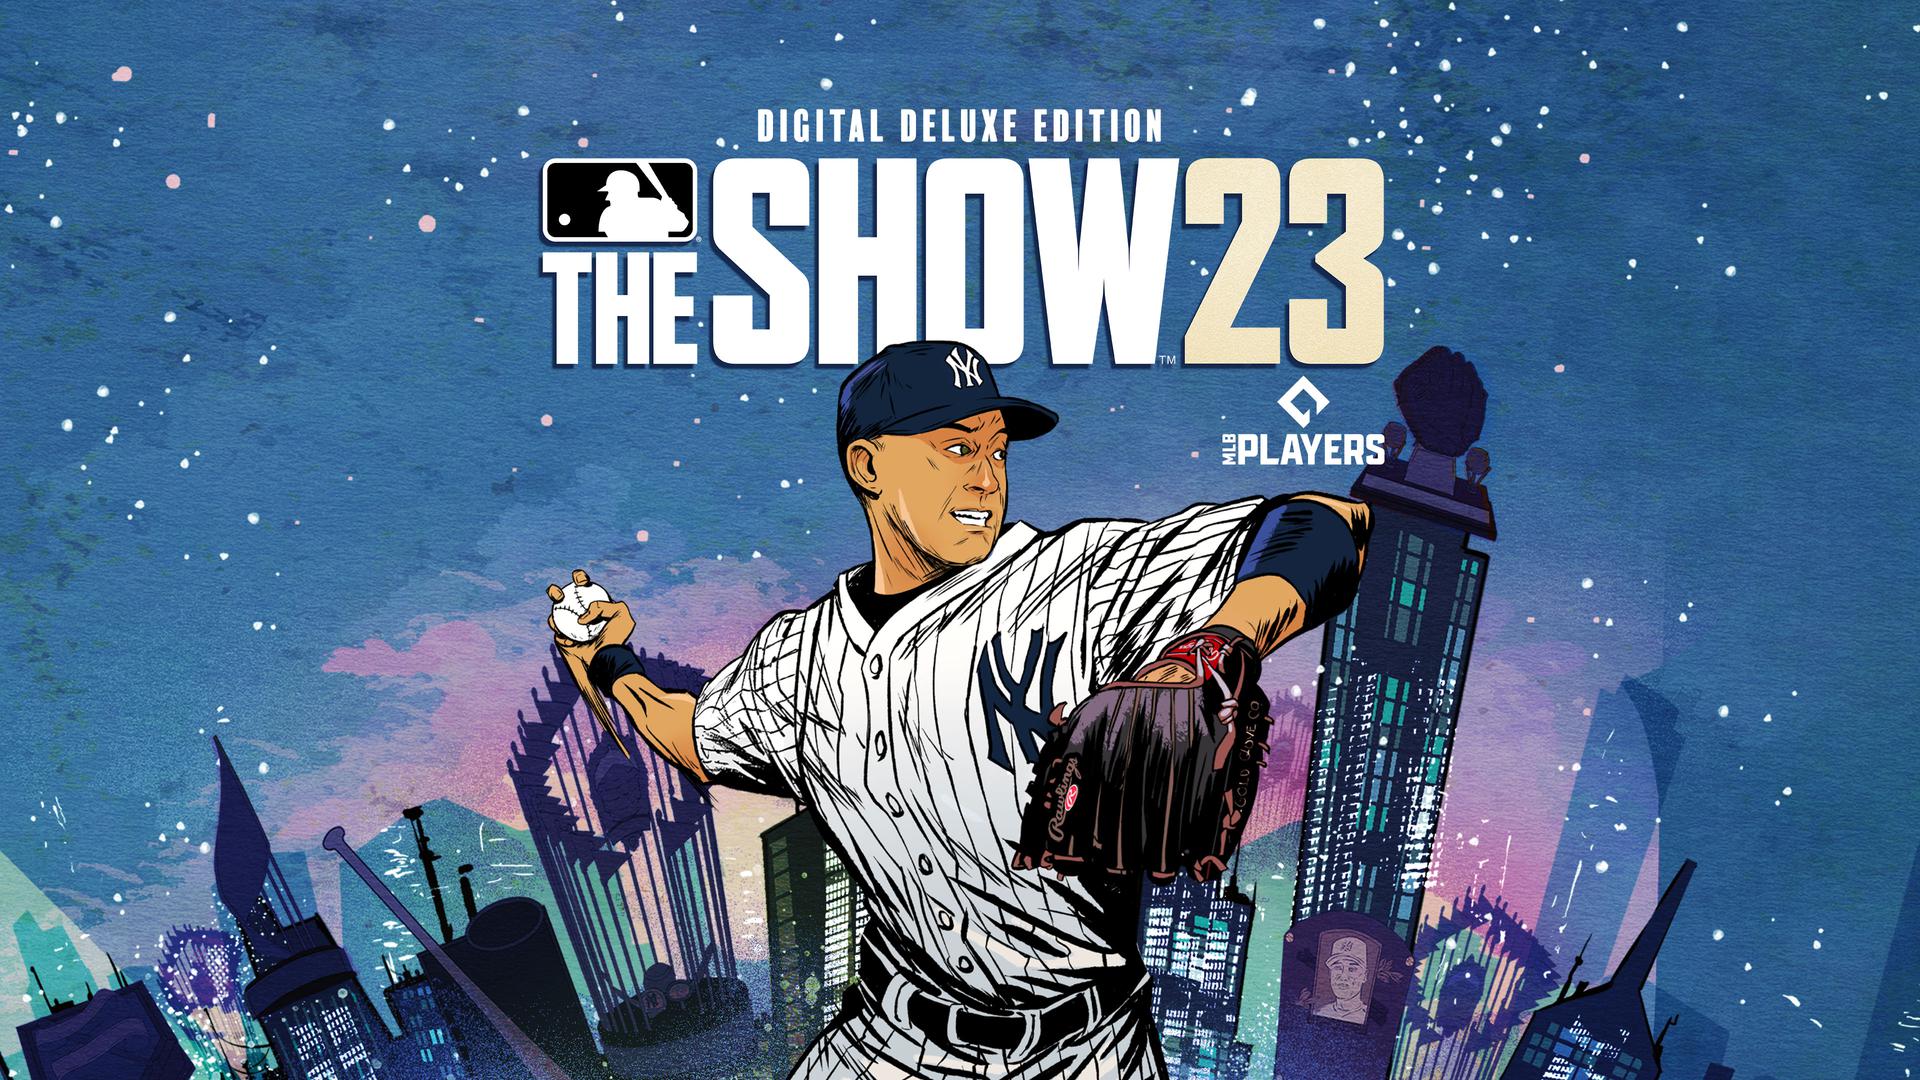 Derek Jeter on the cover of MLB The Show